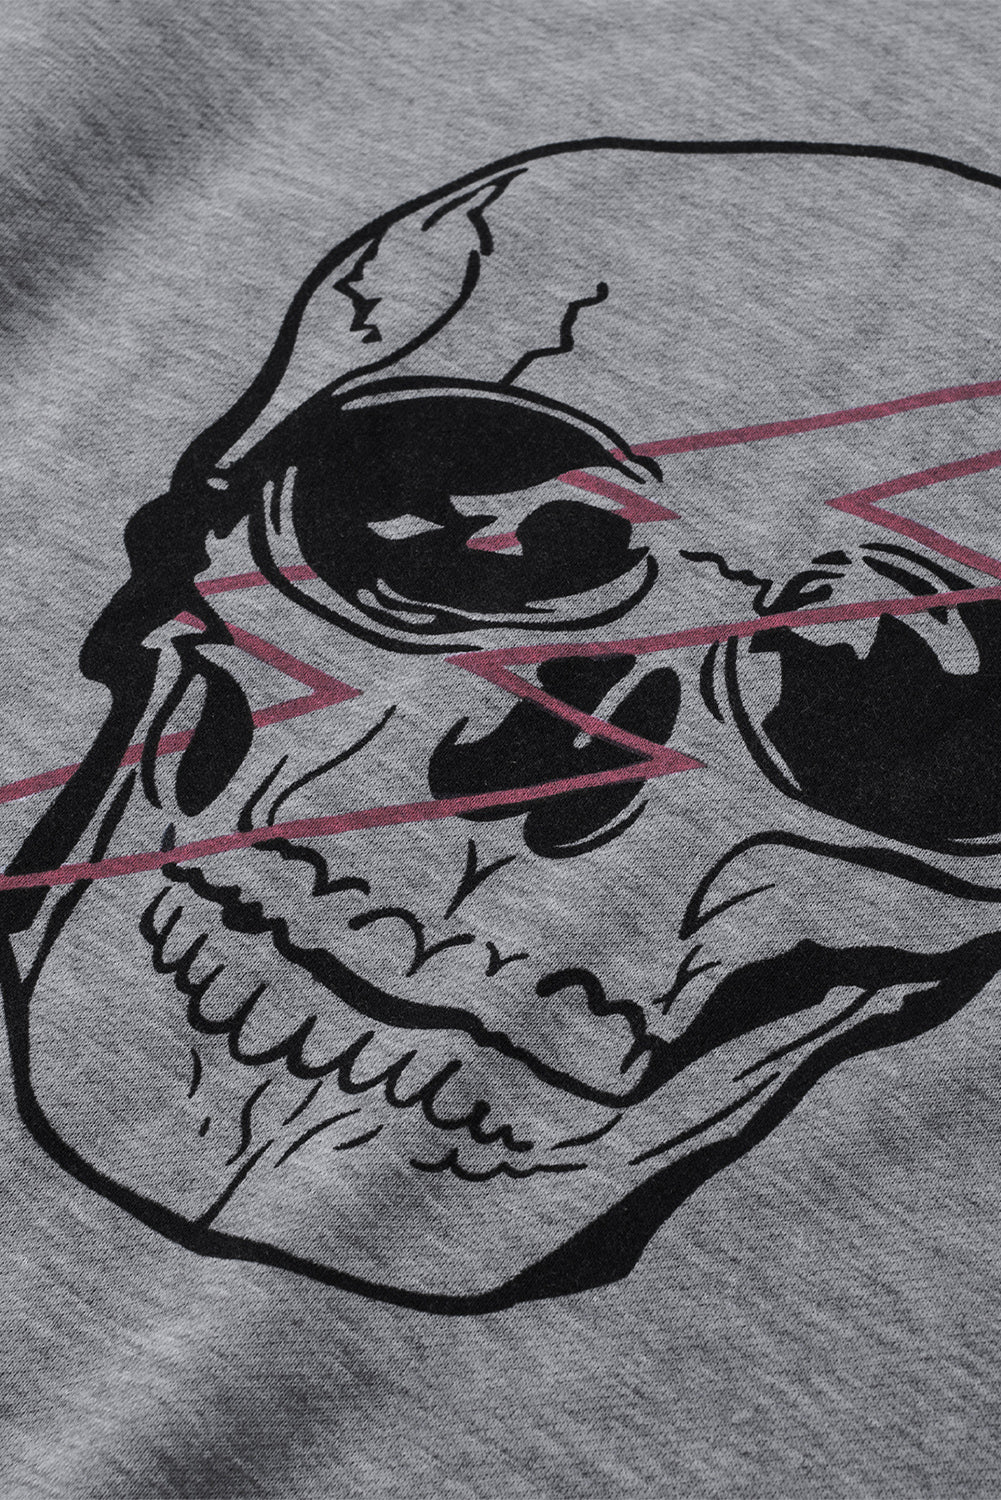 Skull and Lightning Graphic Sweatshirt   